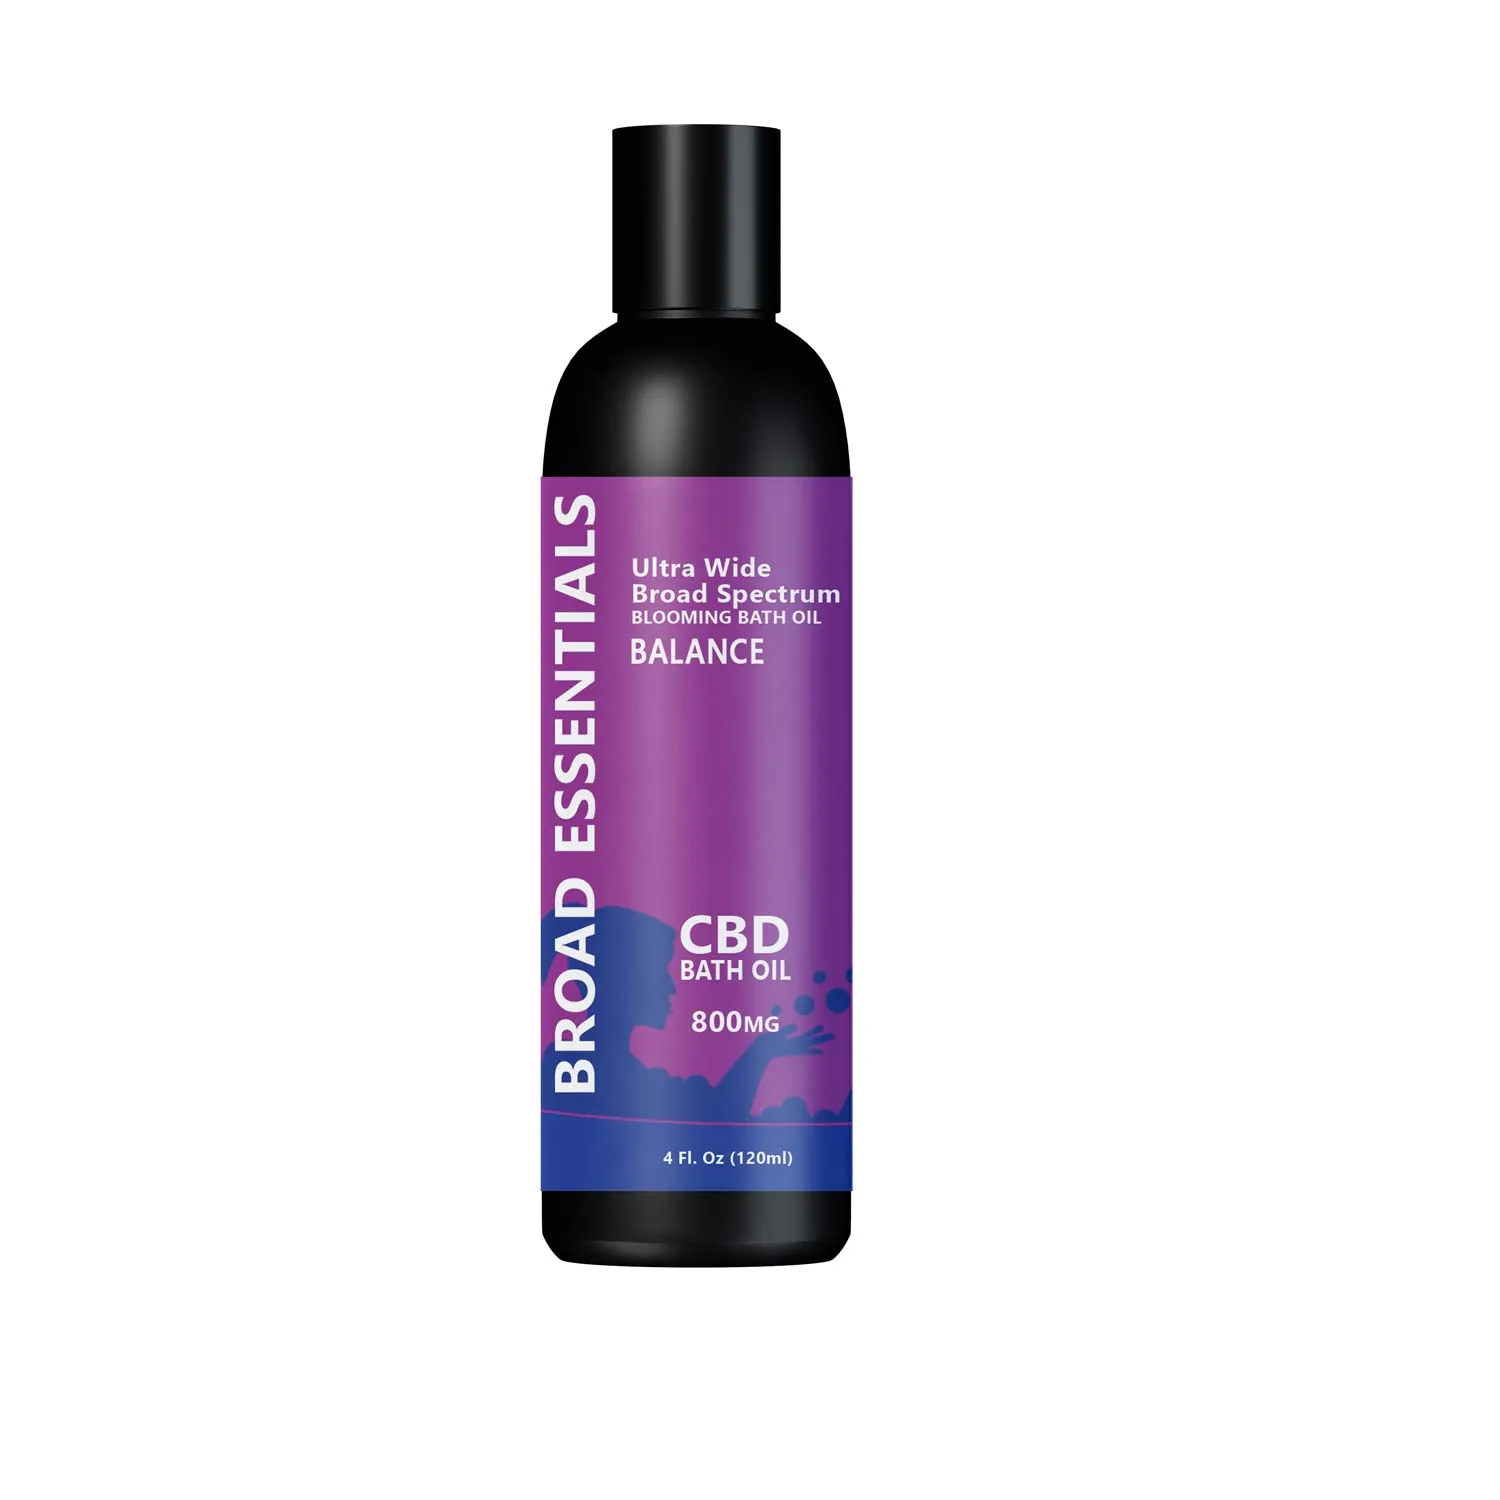 Balance CBD Bath Oil | Fully blooming | 800mg Broad Spectrum CBD - for stress, irritability and balancing hormone levels.